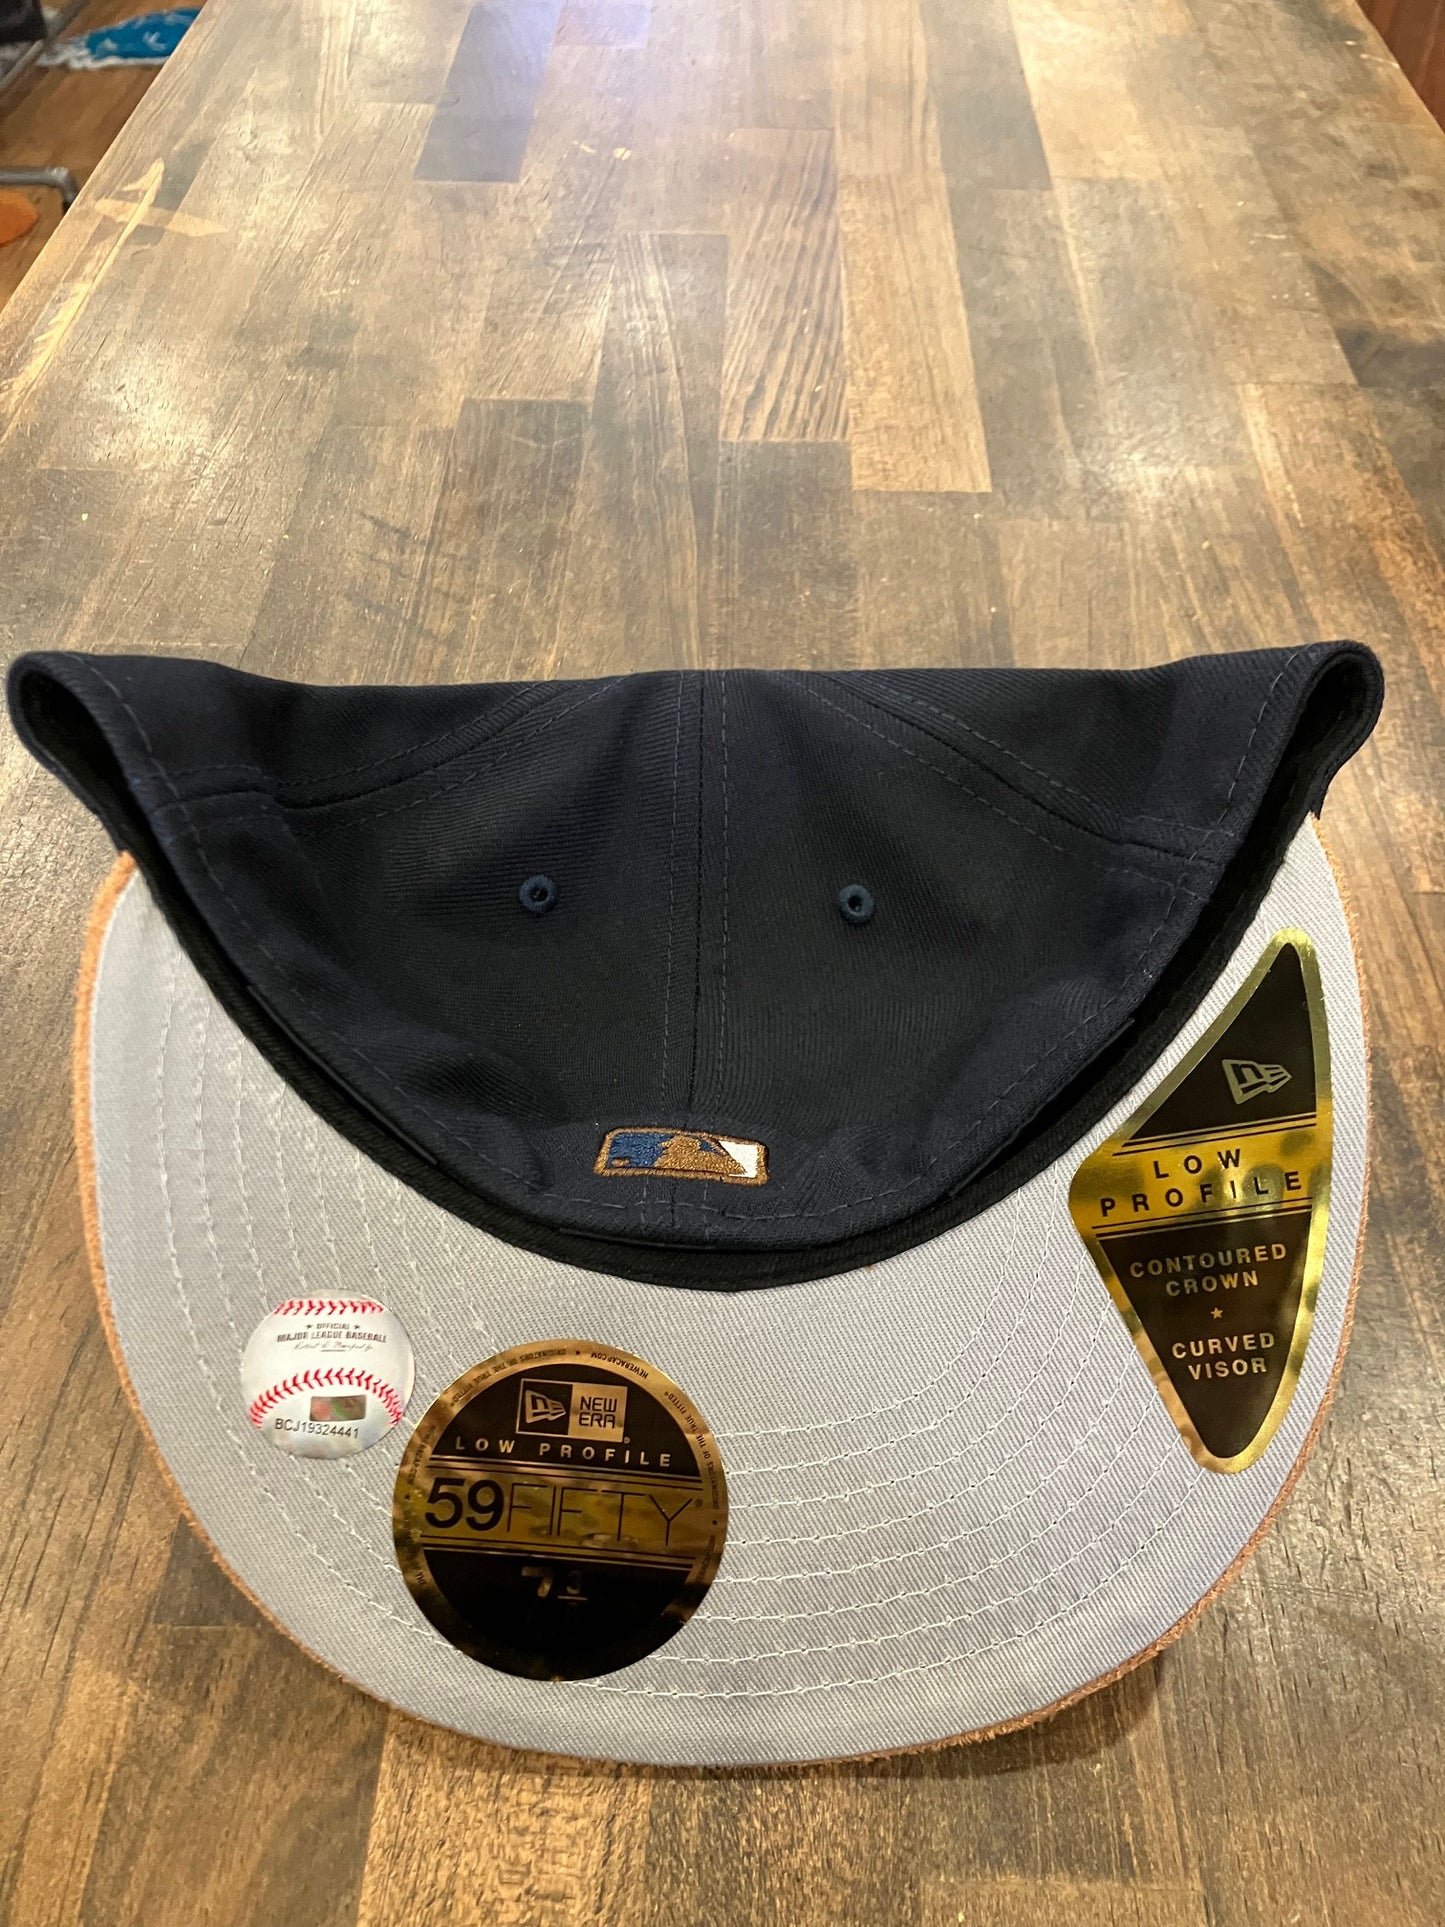 New York Yankees & San Francisco Giants Suede Low Profile New Era Hat